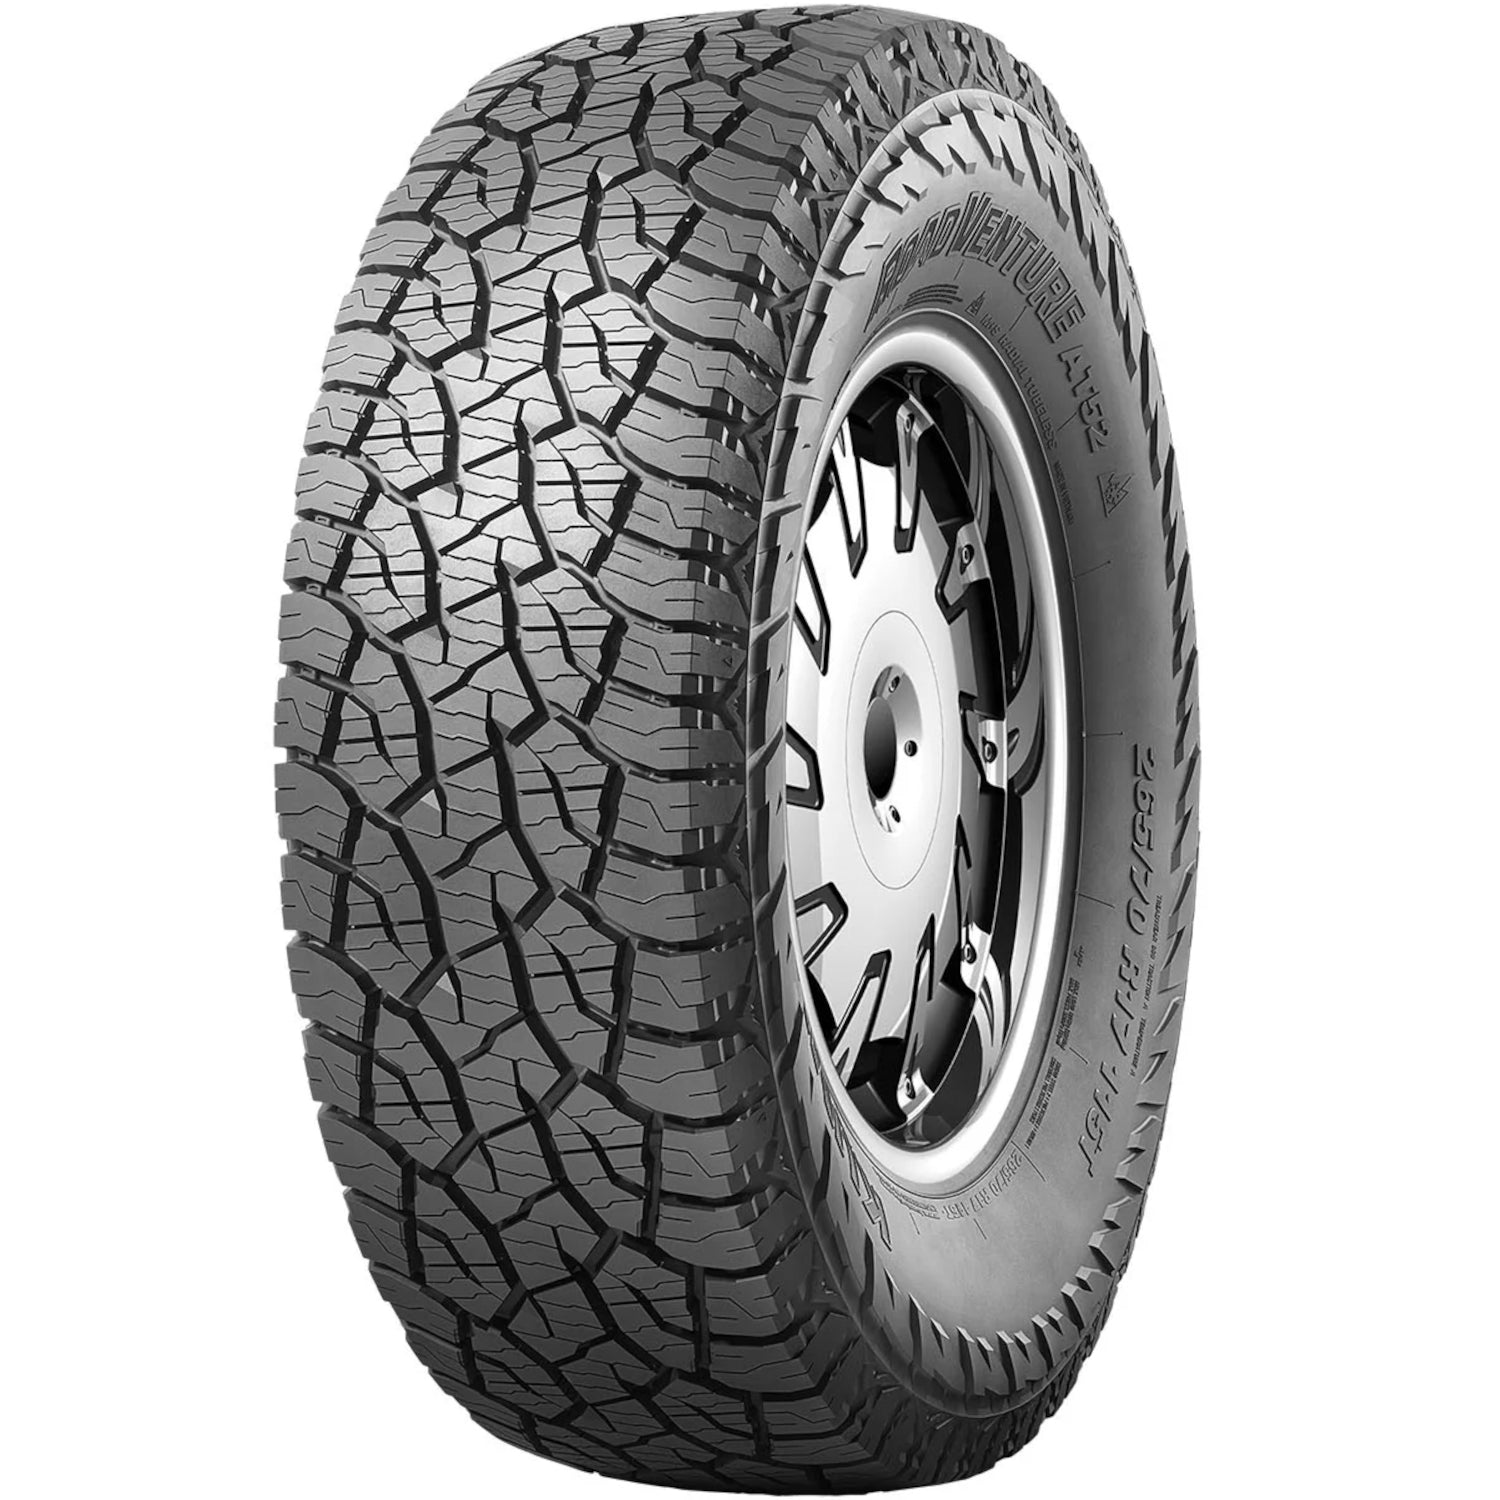 KUMHO ROAD VENTURE AT52 31X10.50R15 Tires